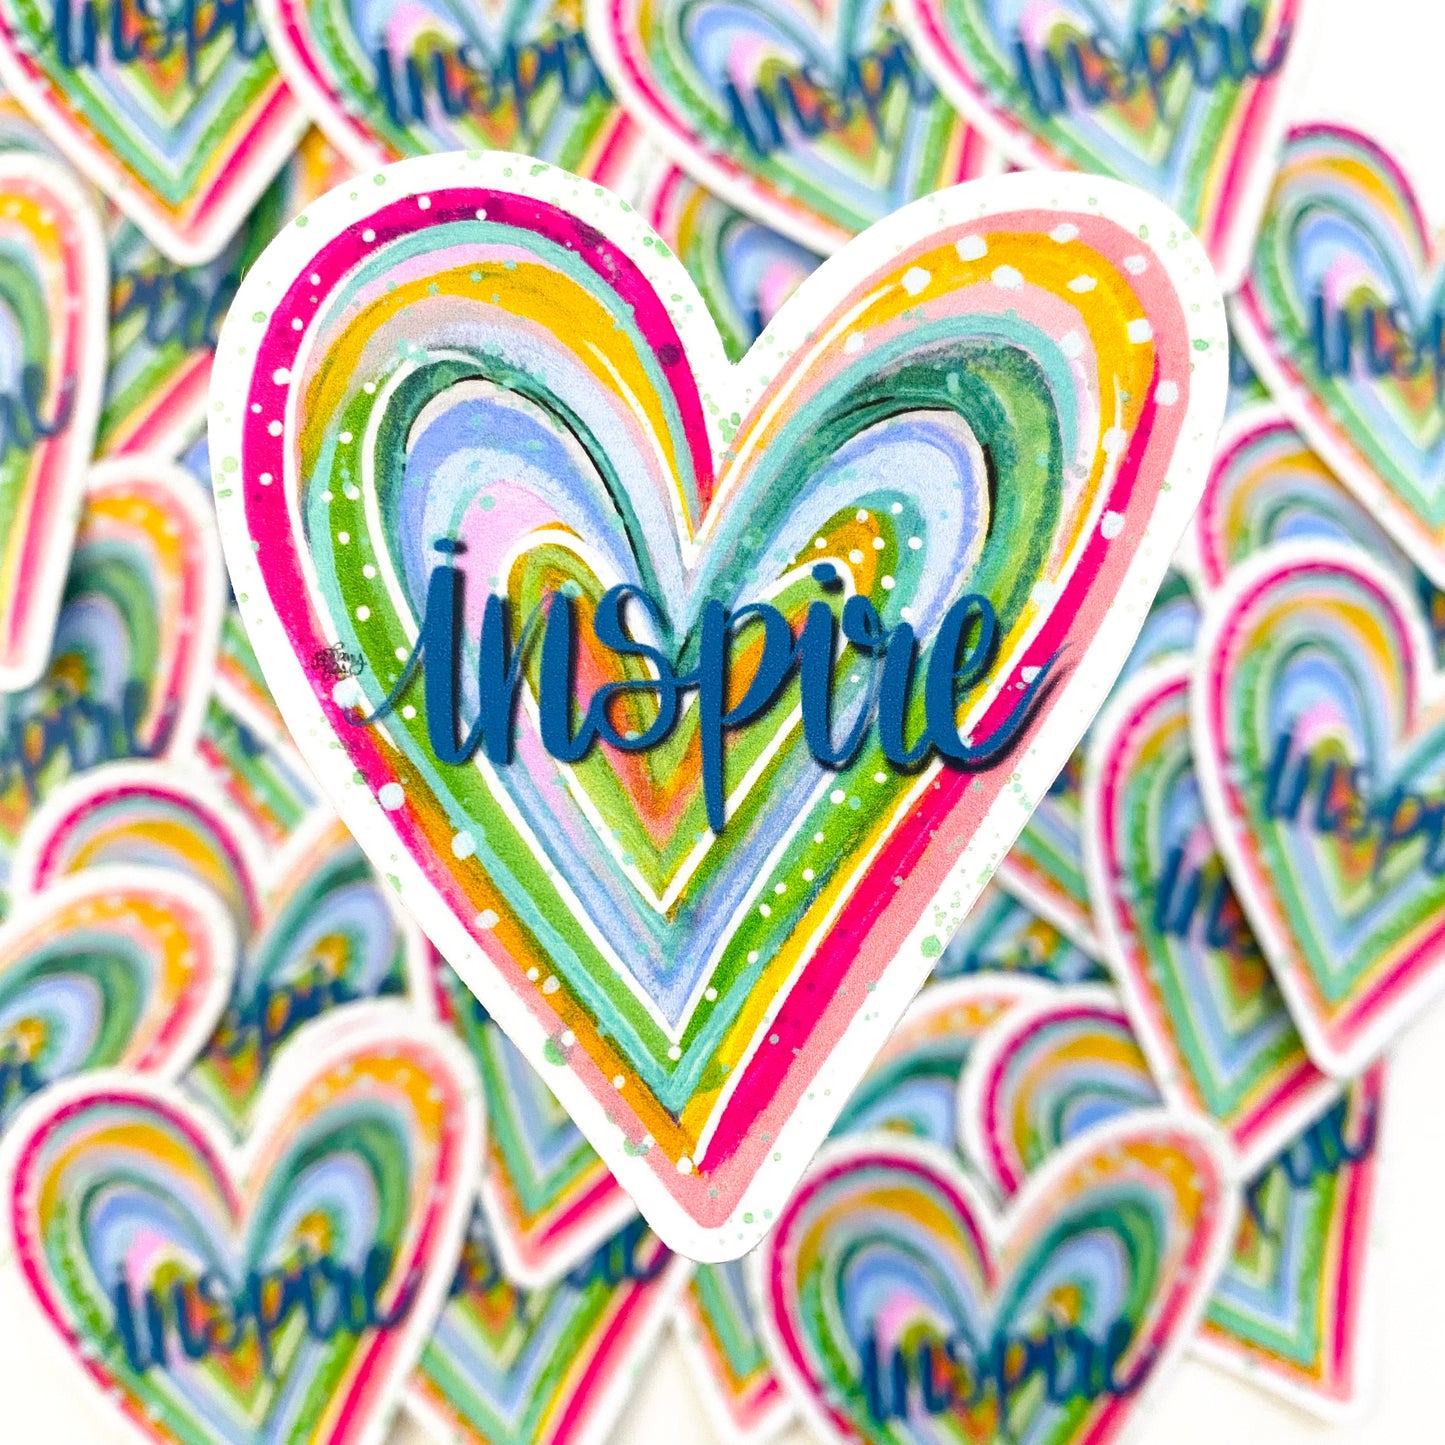 Inspire Heart Vinyl Sticker - March Sticker of the Month 2022